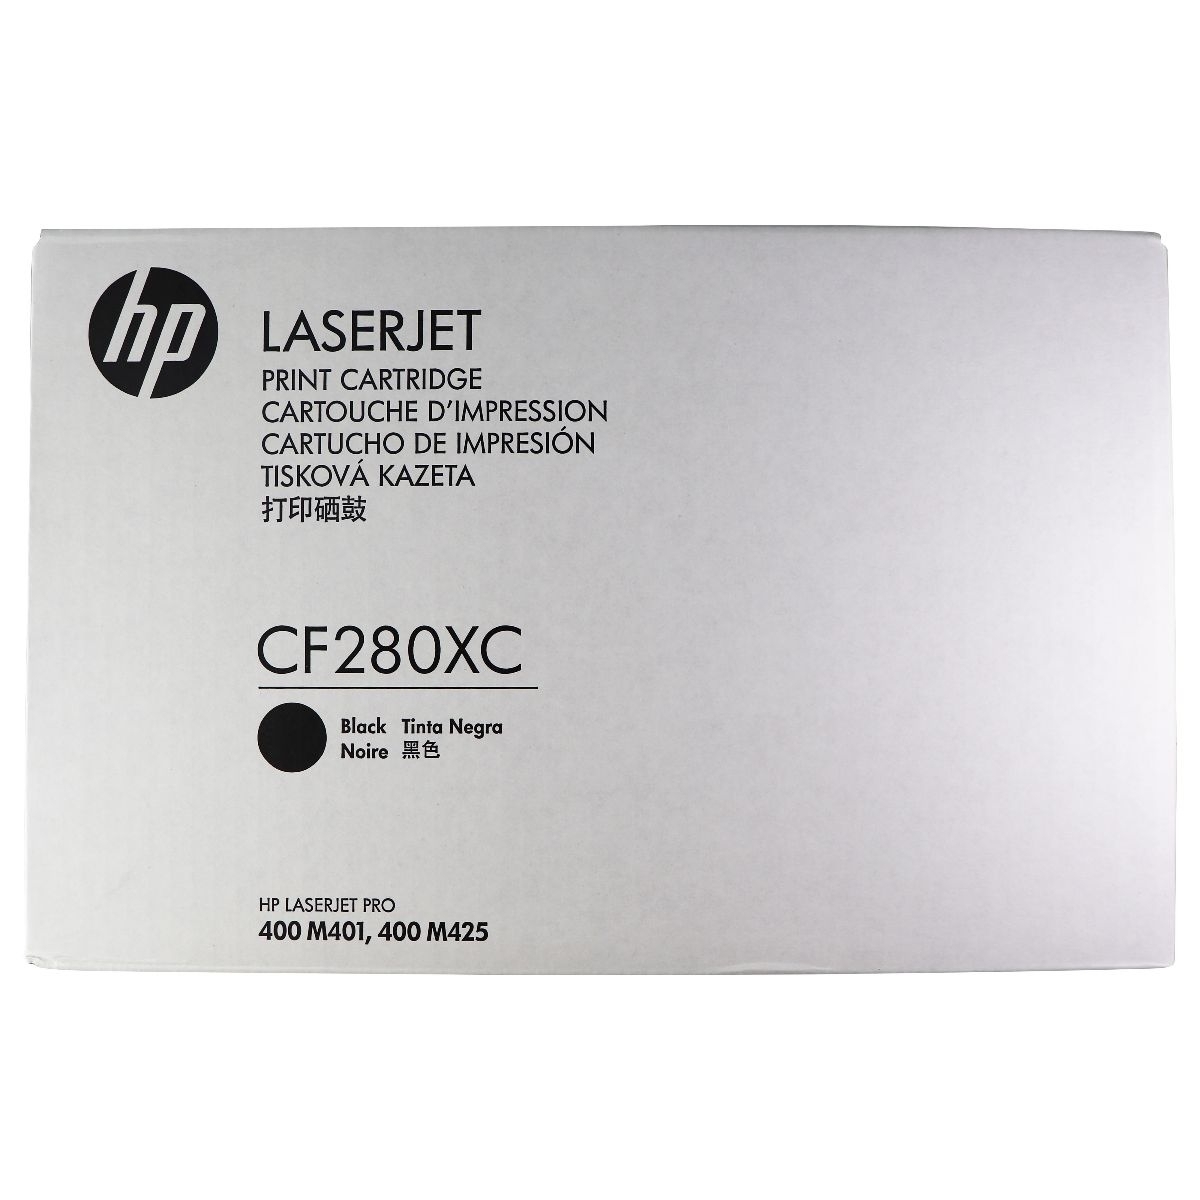 HP CF280XC Black Print Cartridge For HP Laserjet Pro 400 M401 & M425